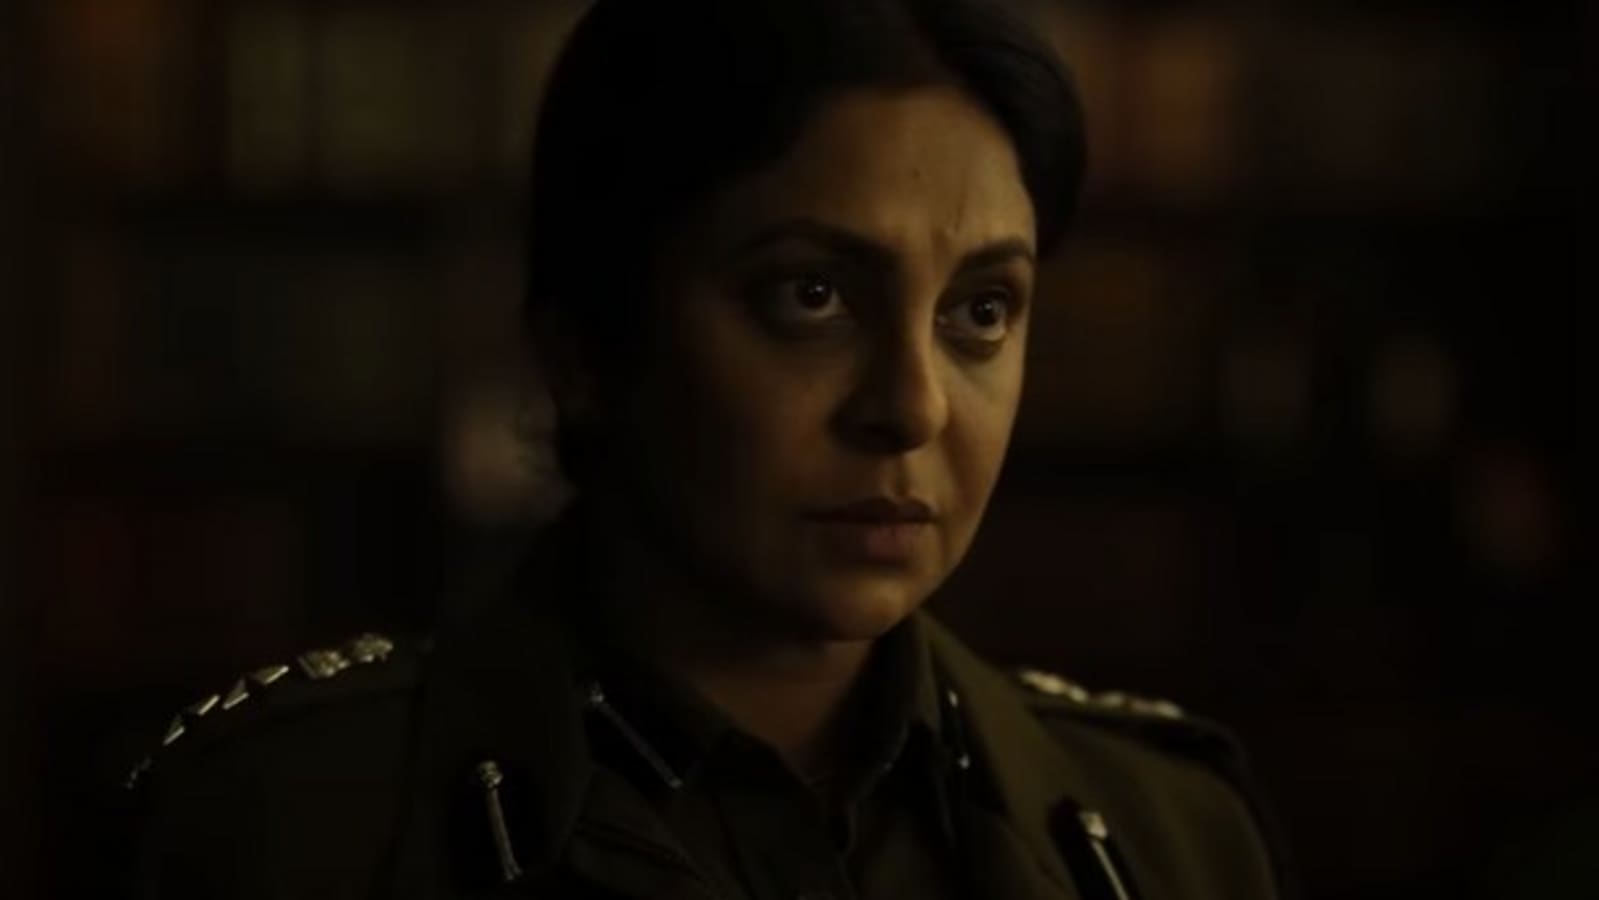 Delhi Crime season 2 teaser: Shefali Shah’s supercop returns as Delhi Police hunts for serial killer. Watch